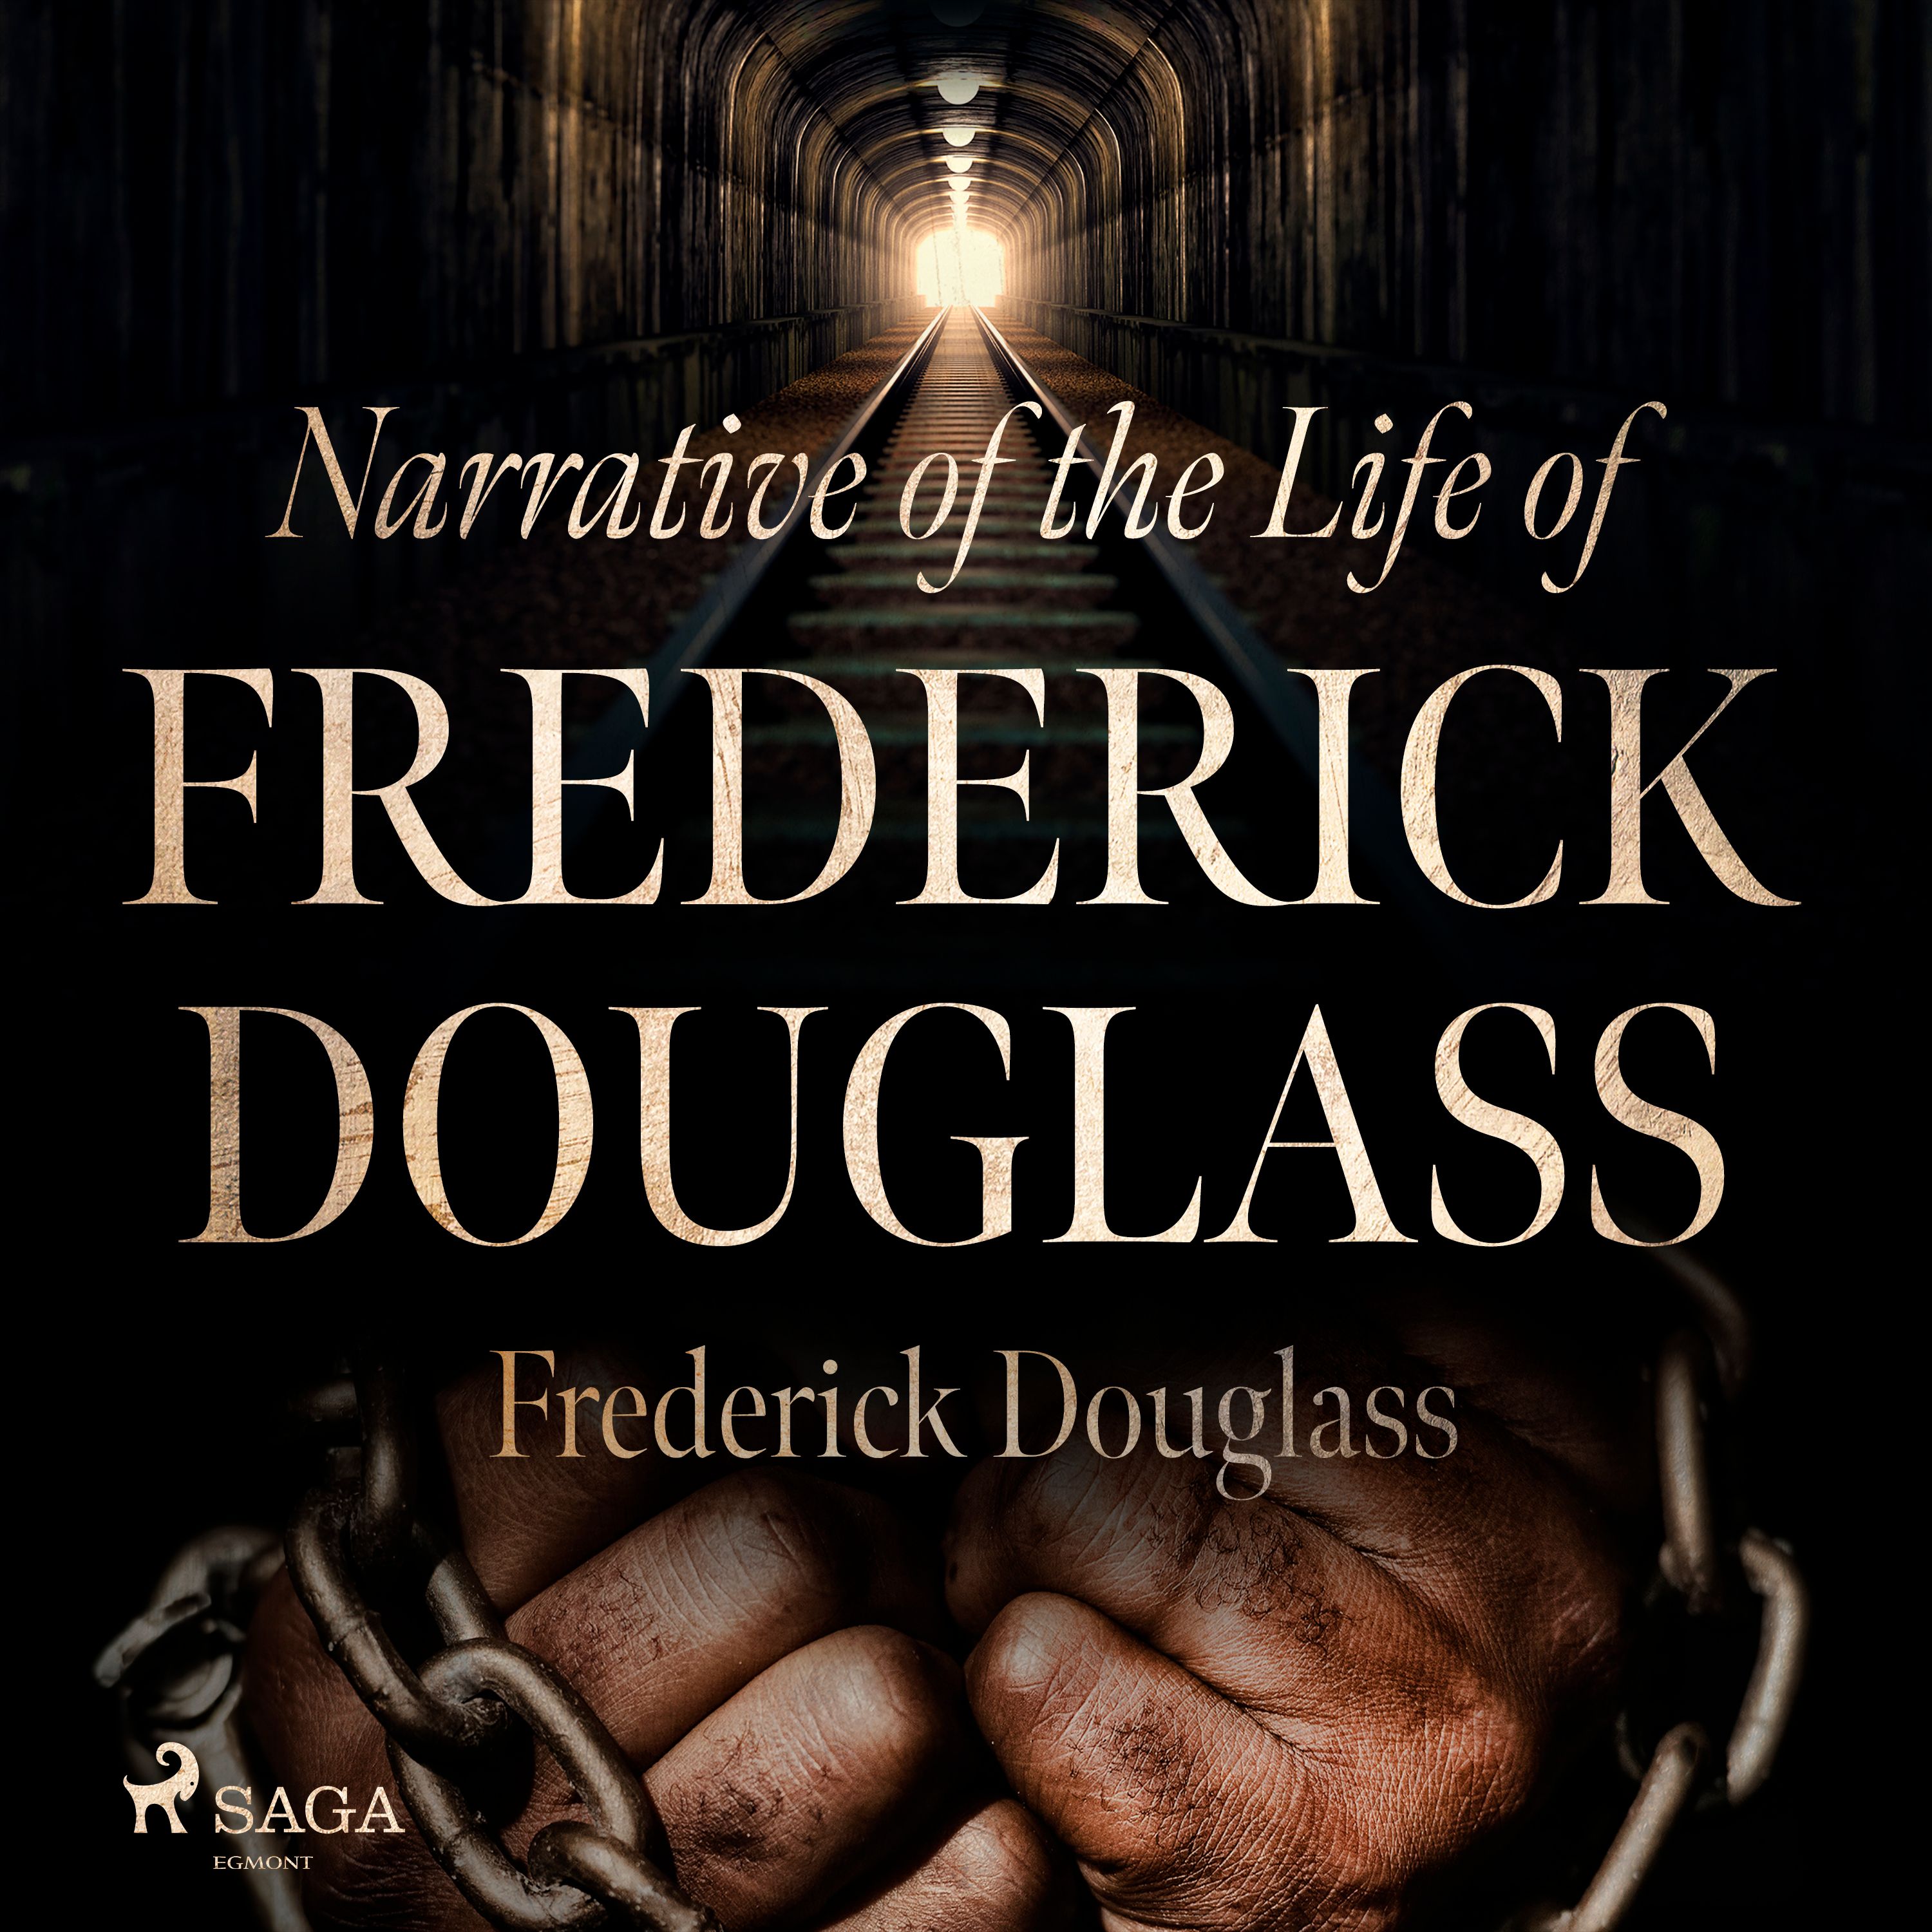 Narrative of the Life of Frederick Douglass, lydbog af Frederick Douglass